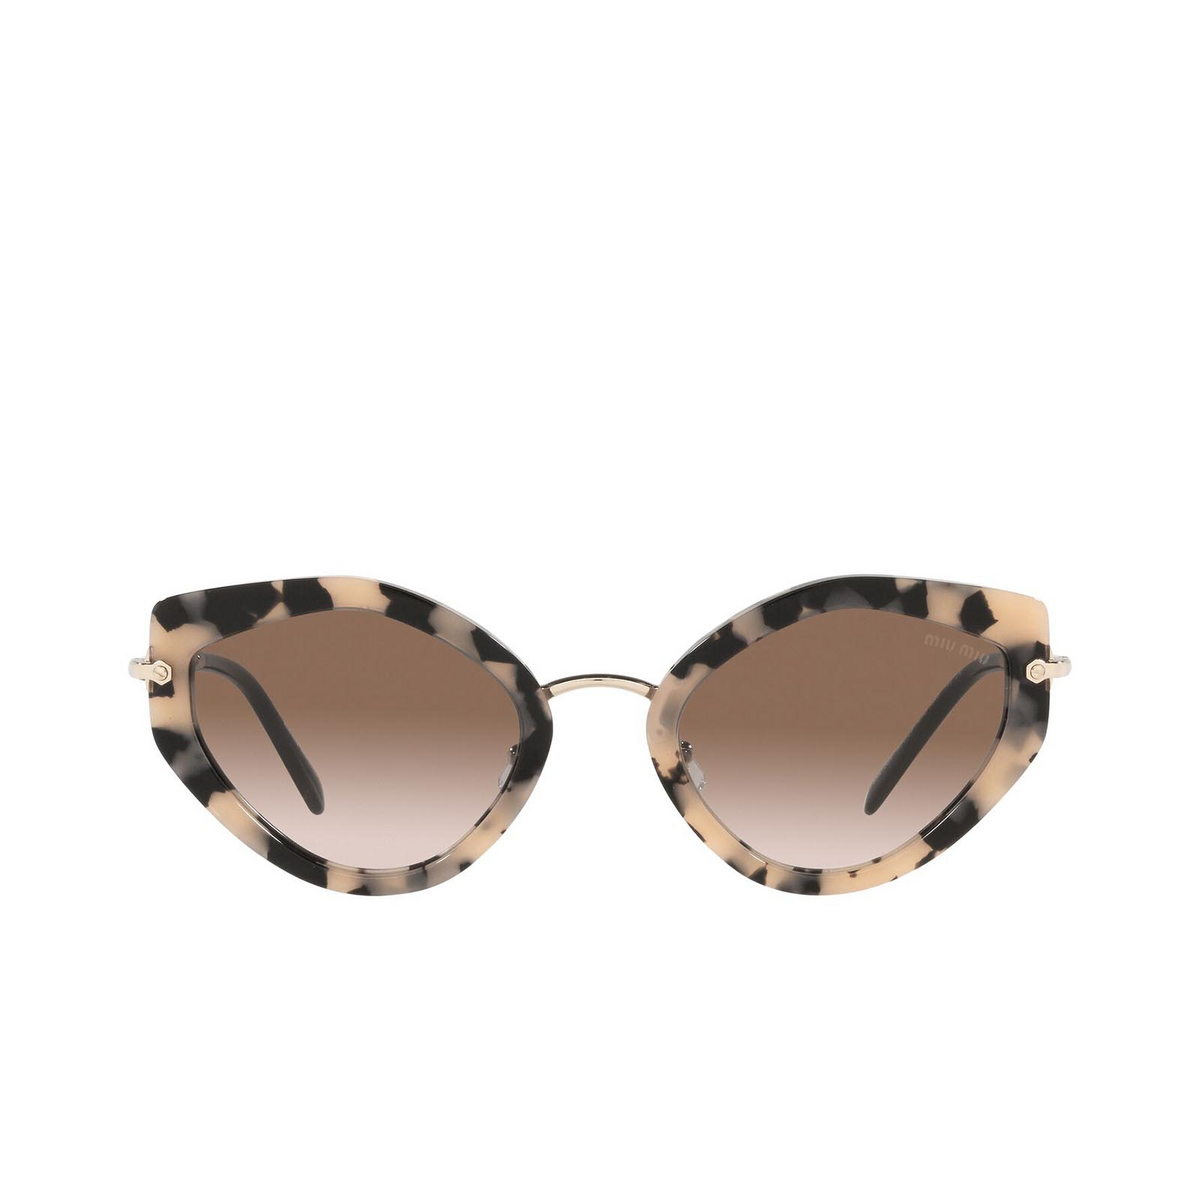 Miu Miu® Butterfly Sunglasses: MU 08XS color Havana Pink 07D0A6 - front view.